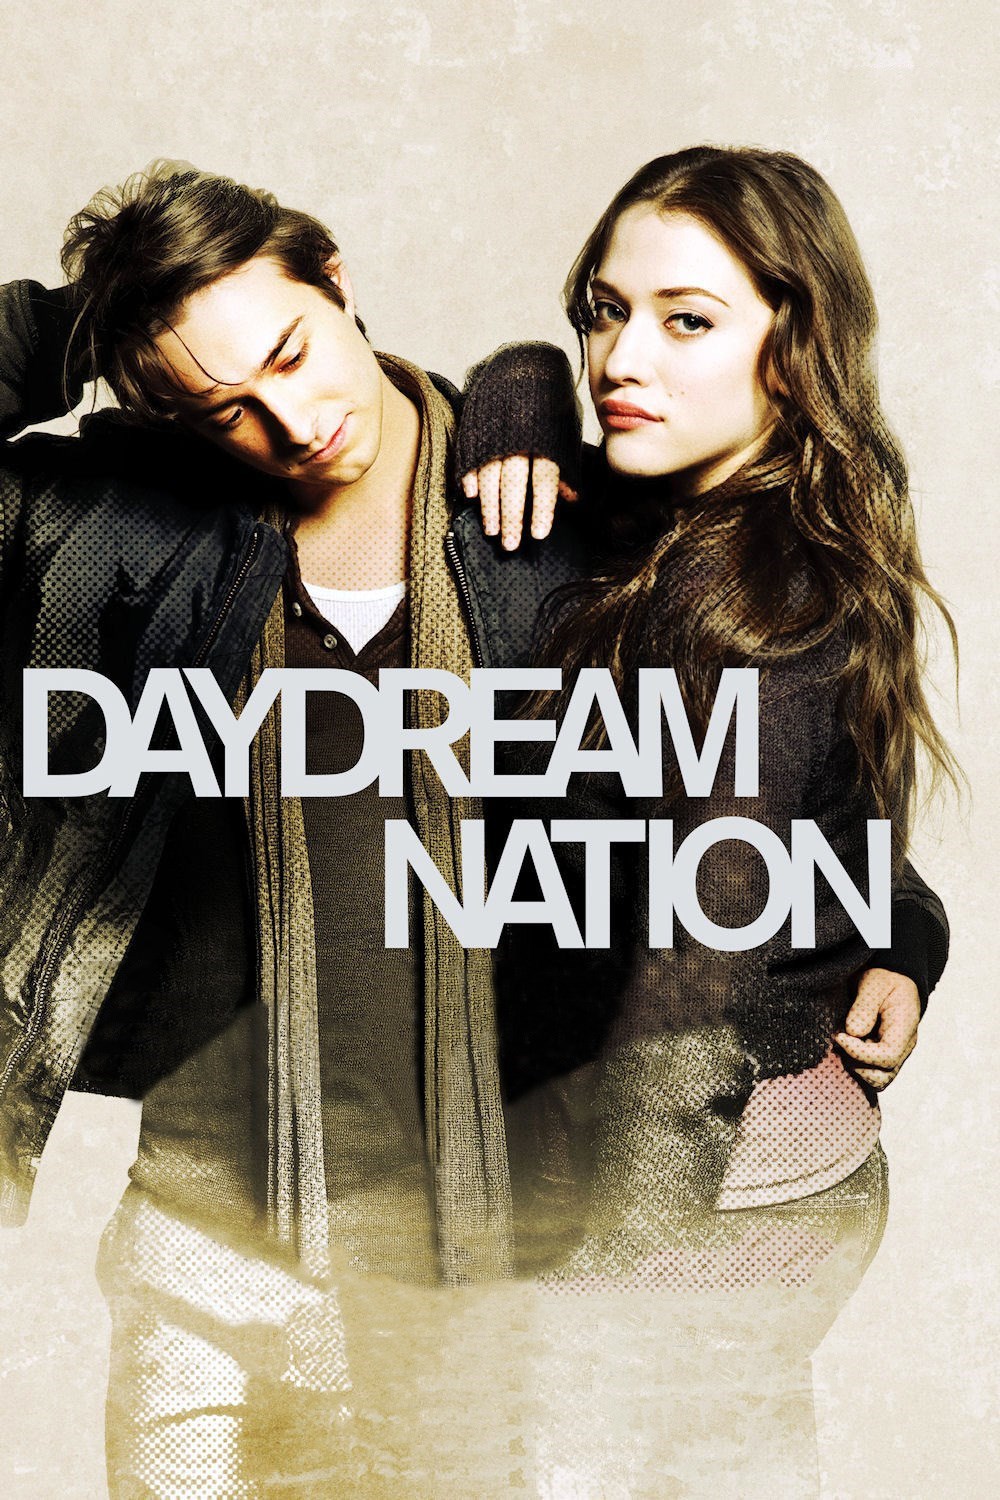 Daydream Nation 2010